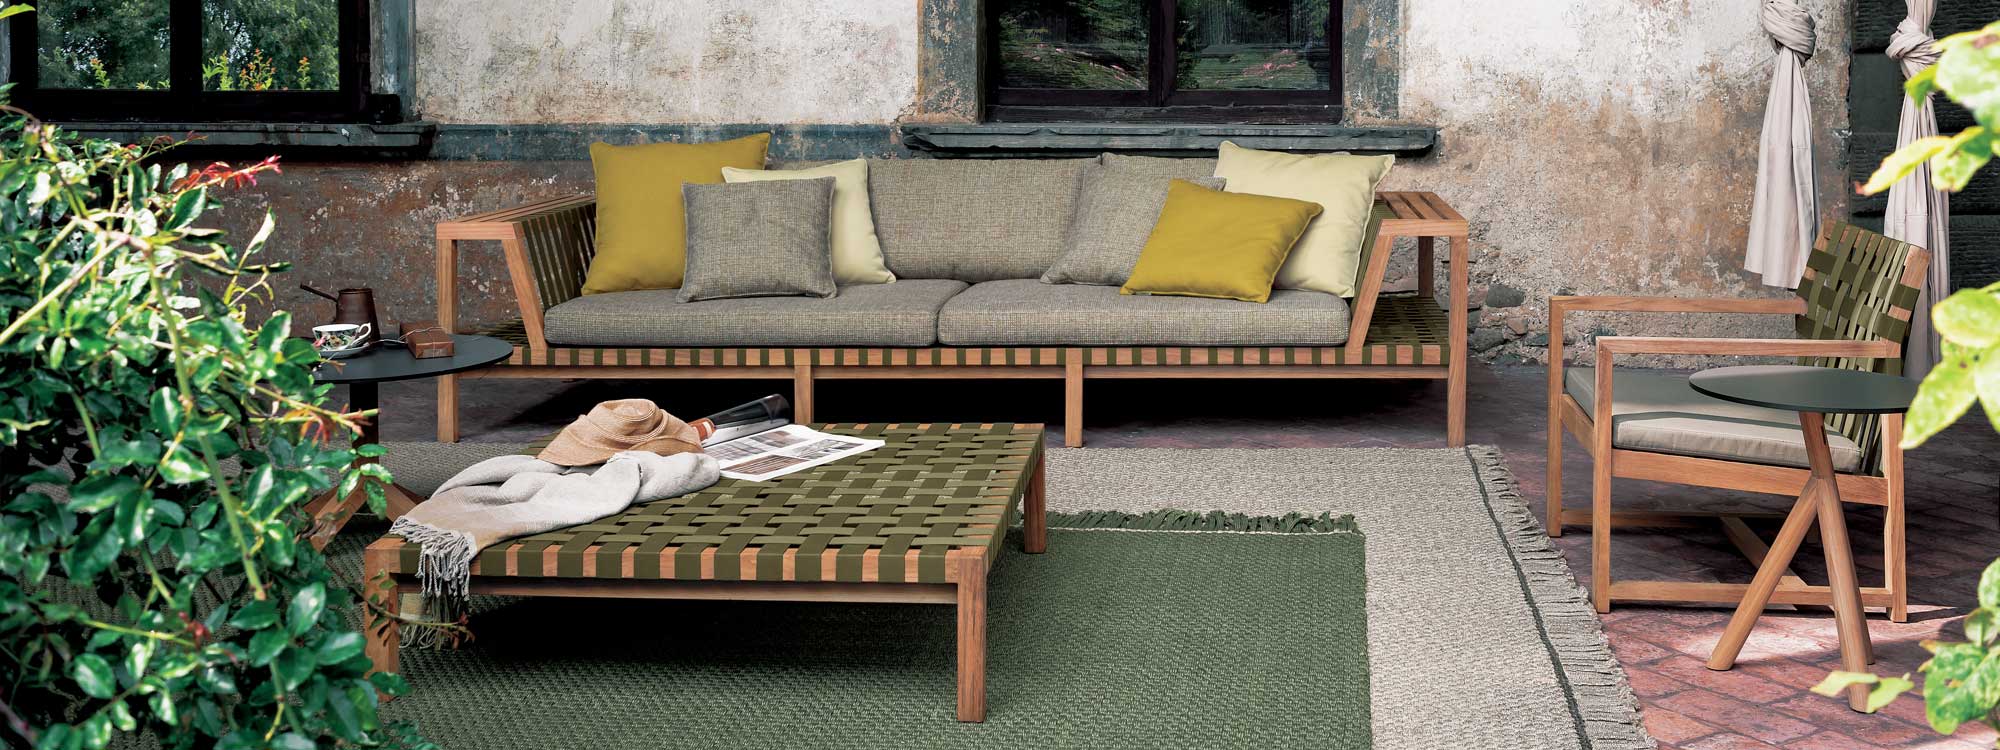 Network teak garden sofa with Olive webbing on outdoor terrace